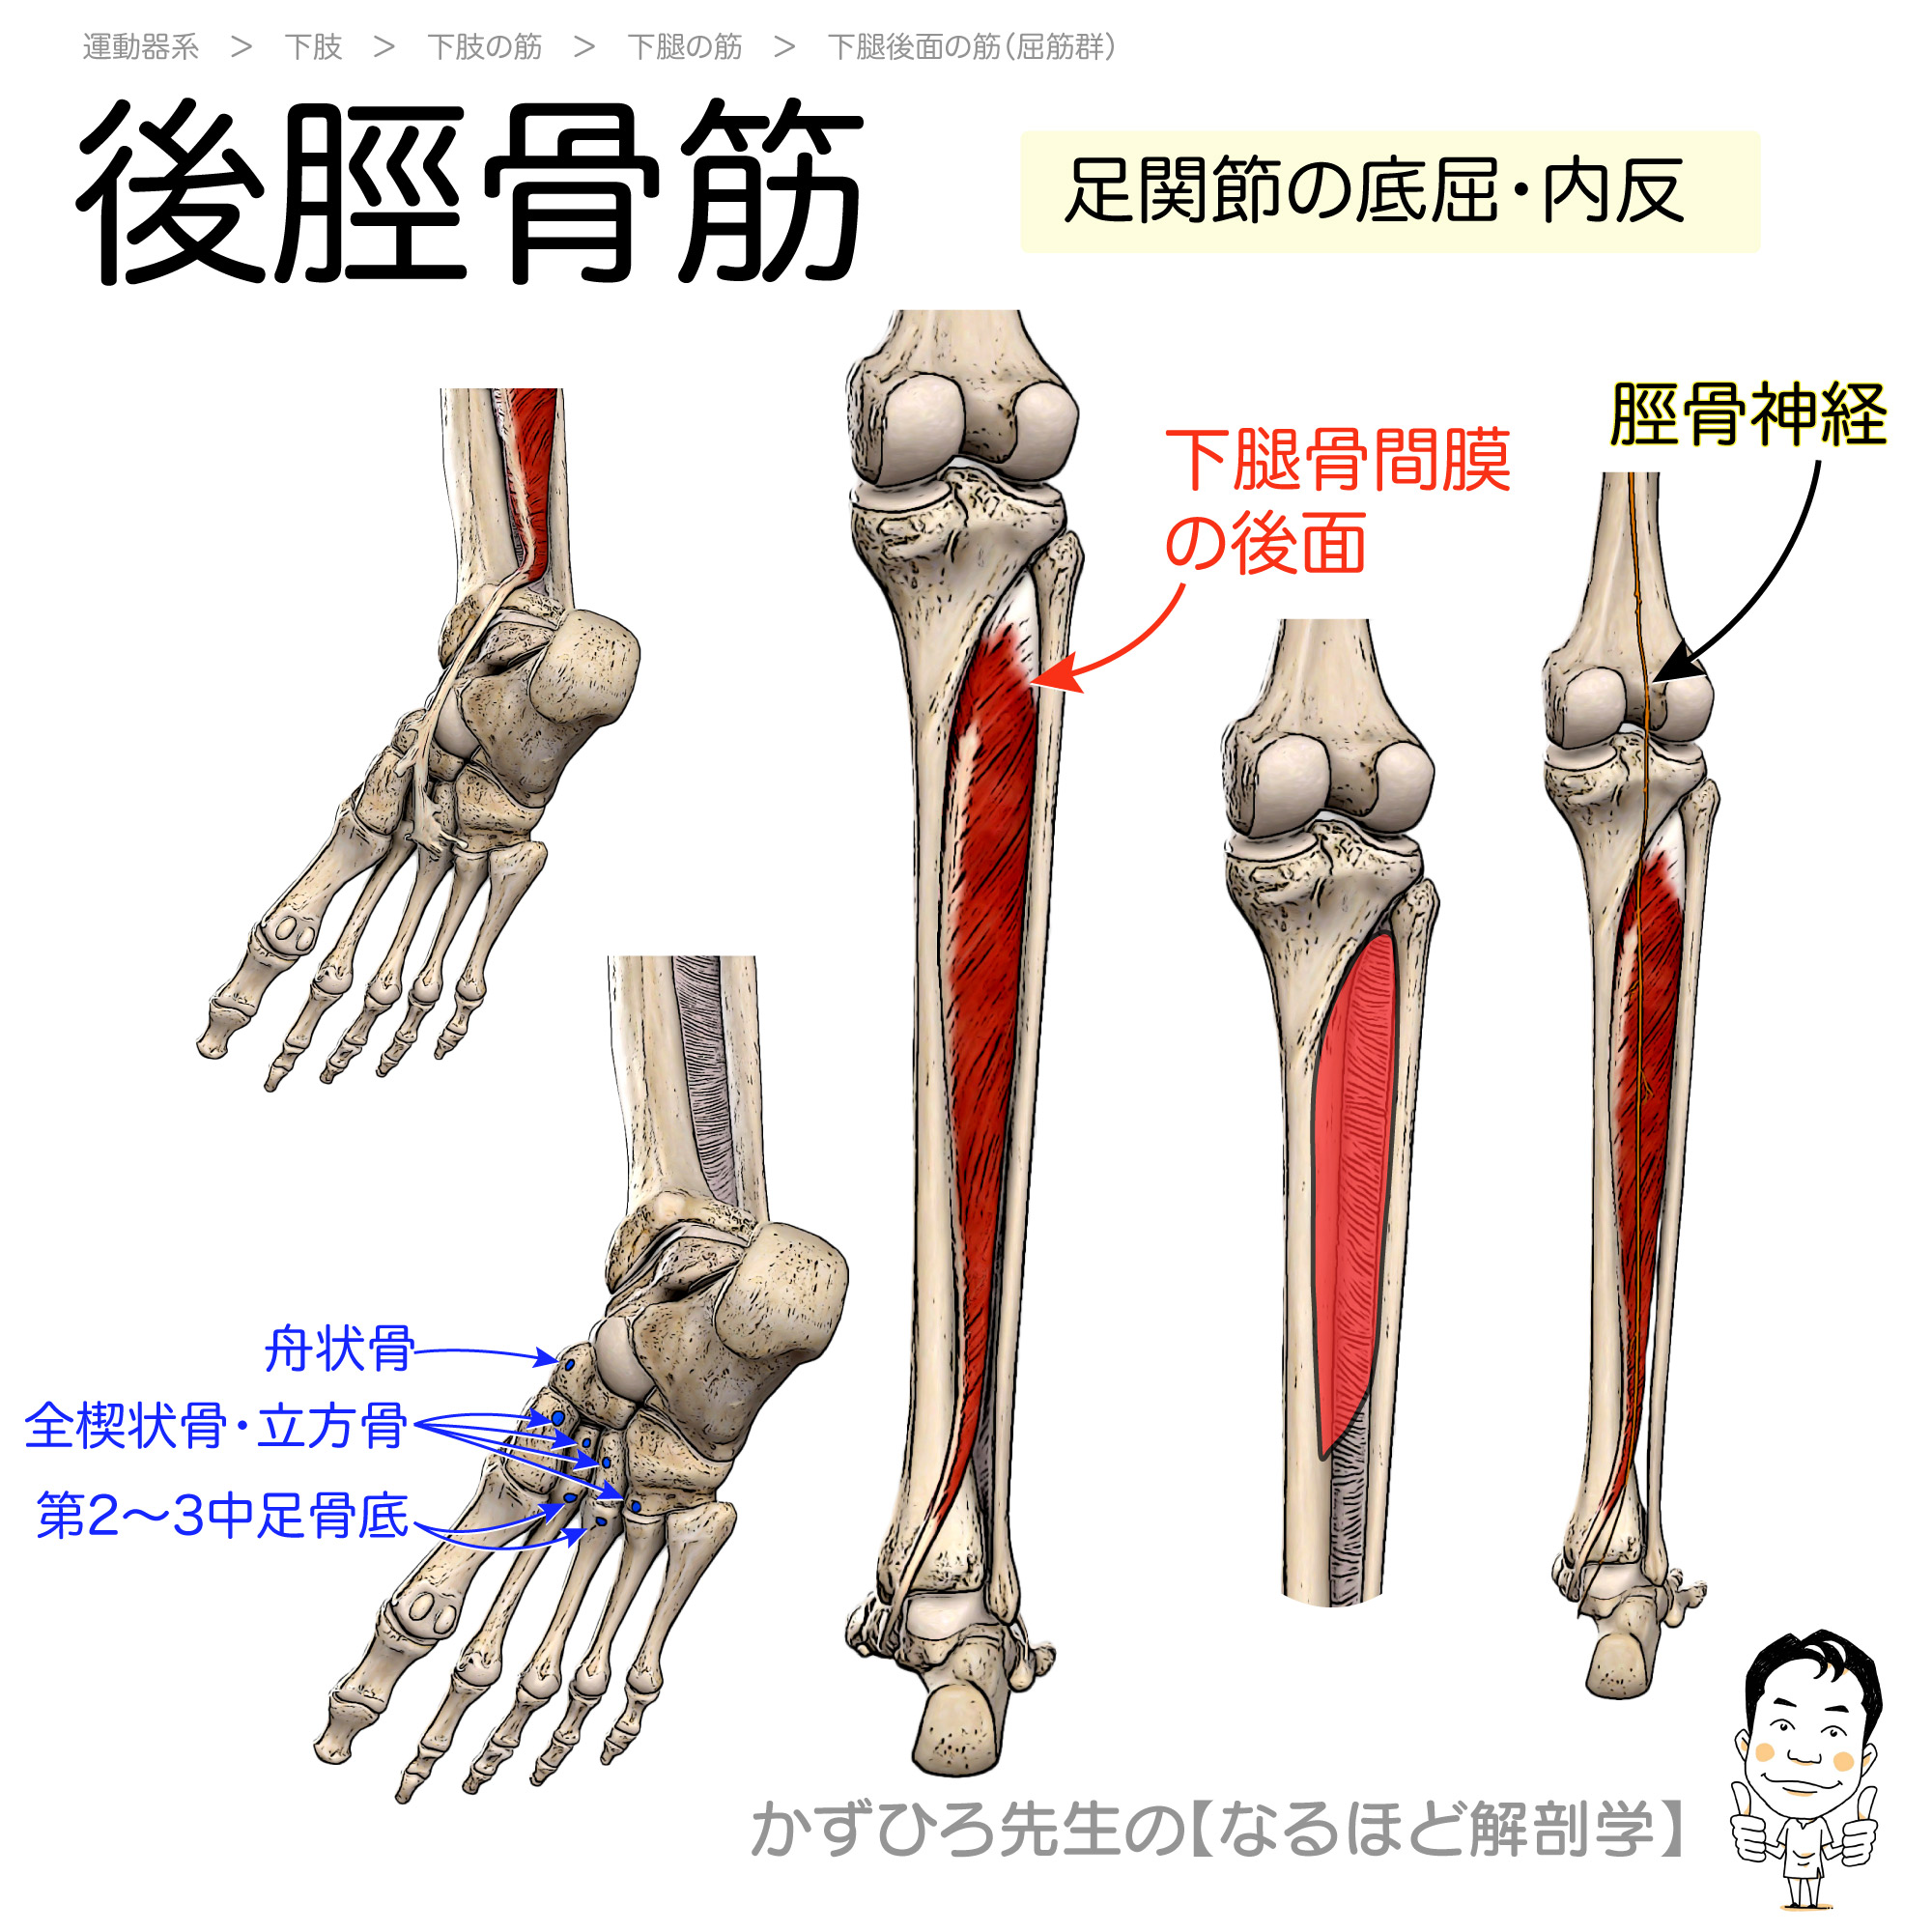 後脛骨筋の起始・停止・支配神経（tibialis posterior）暗記用画像付き | 徹底的解剖学